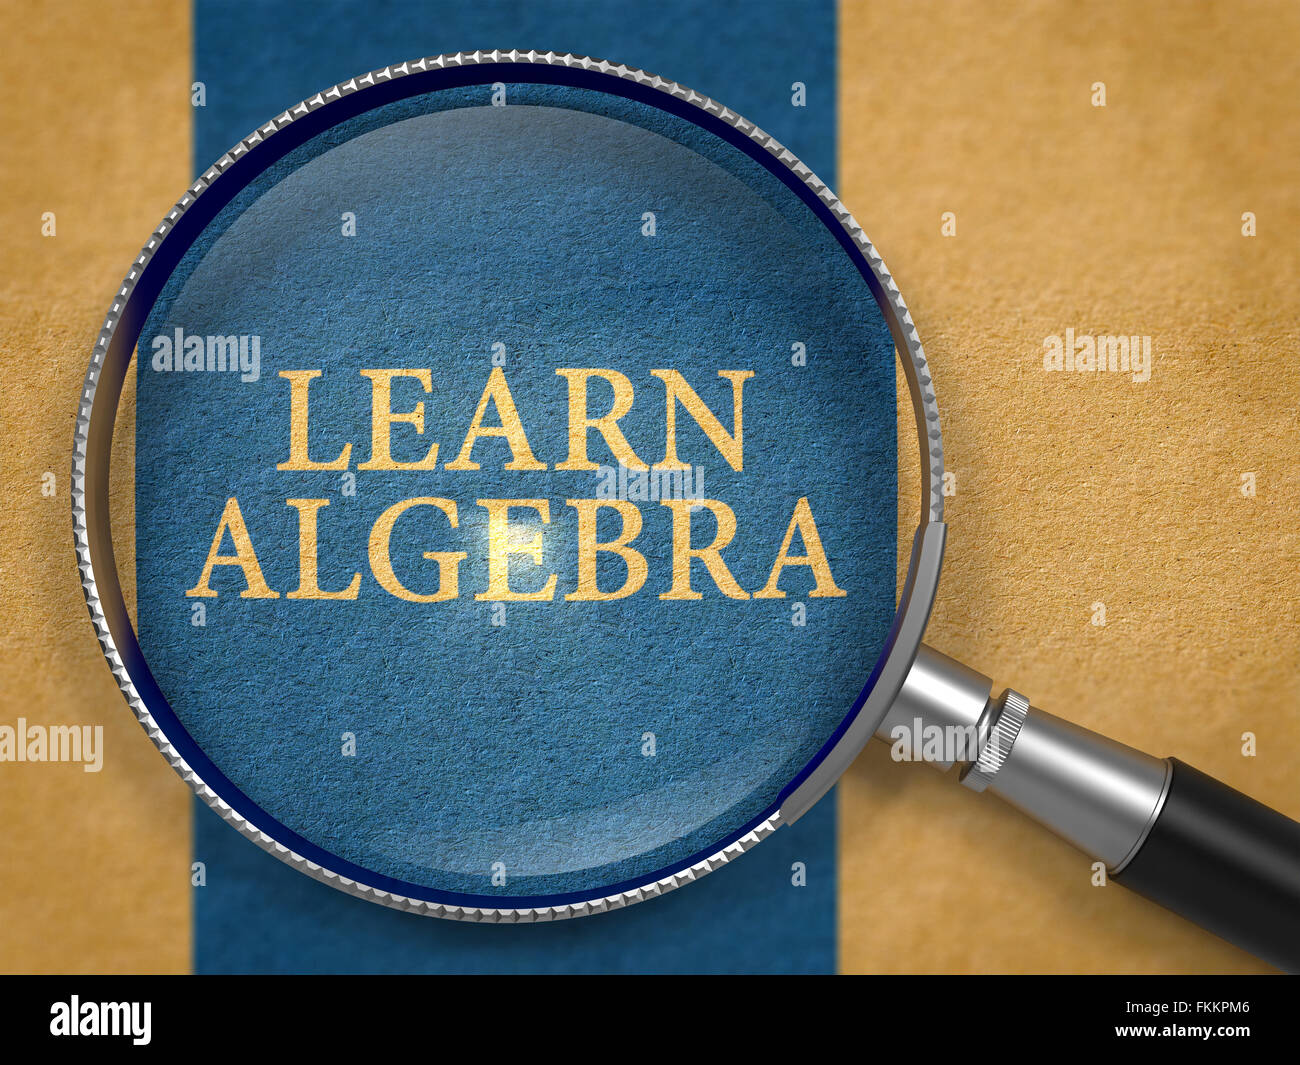 Learn Algebra Concept through Magnifier. Stock Photo